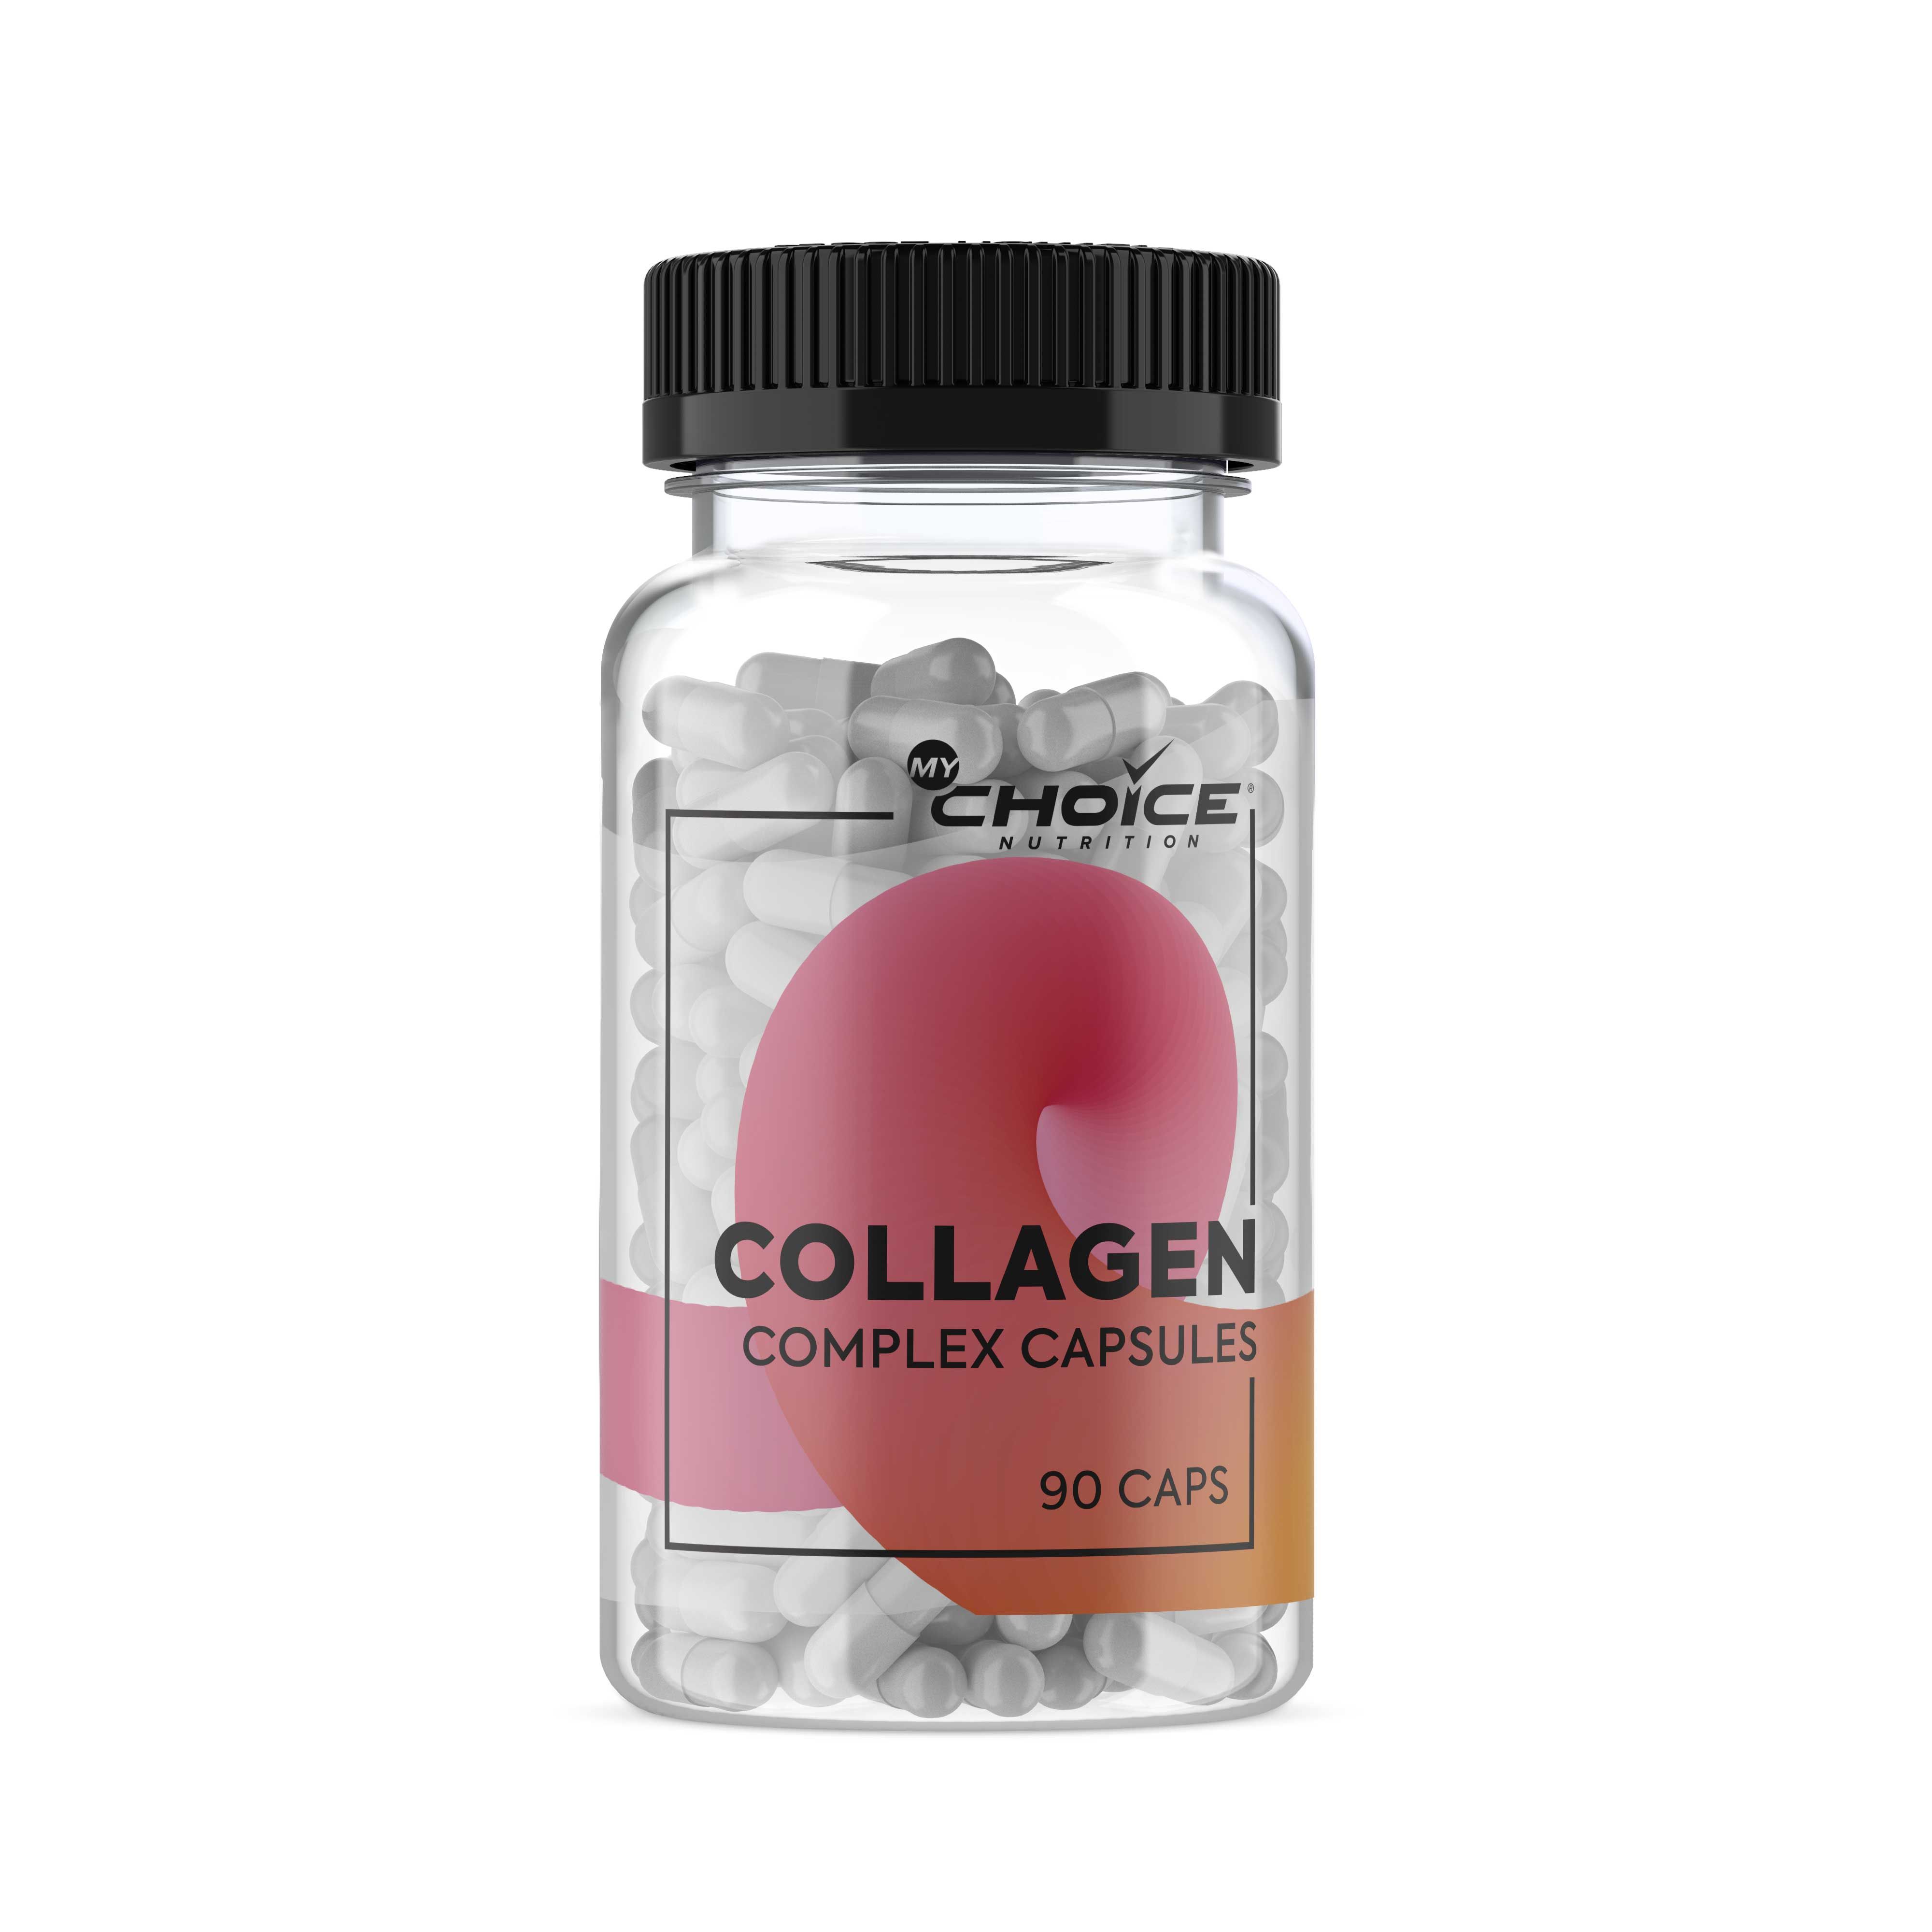 Препарат для суставов и связок MyChoice Nutrition Collagen Complex - фото 1